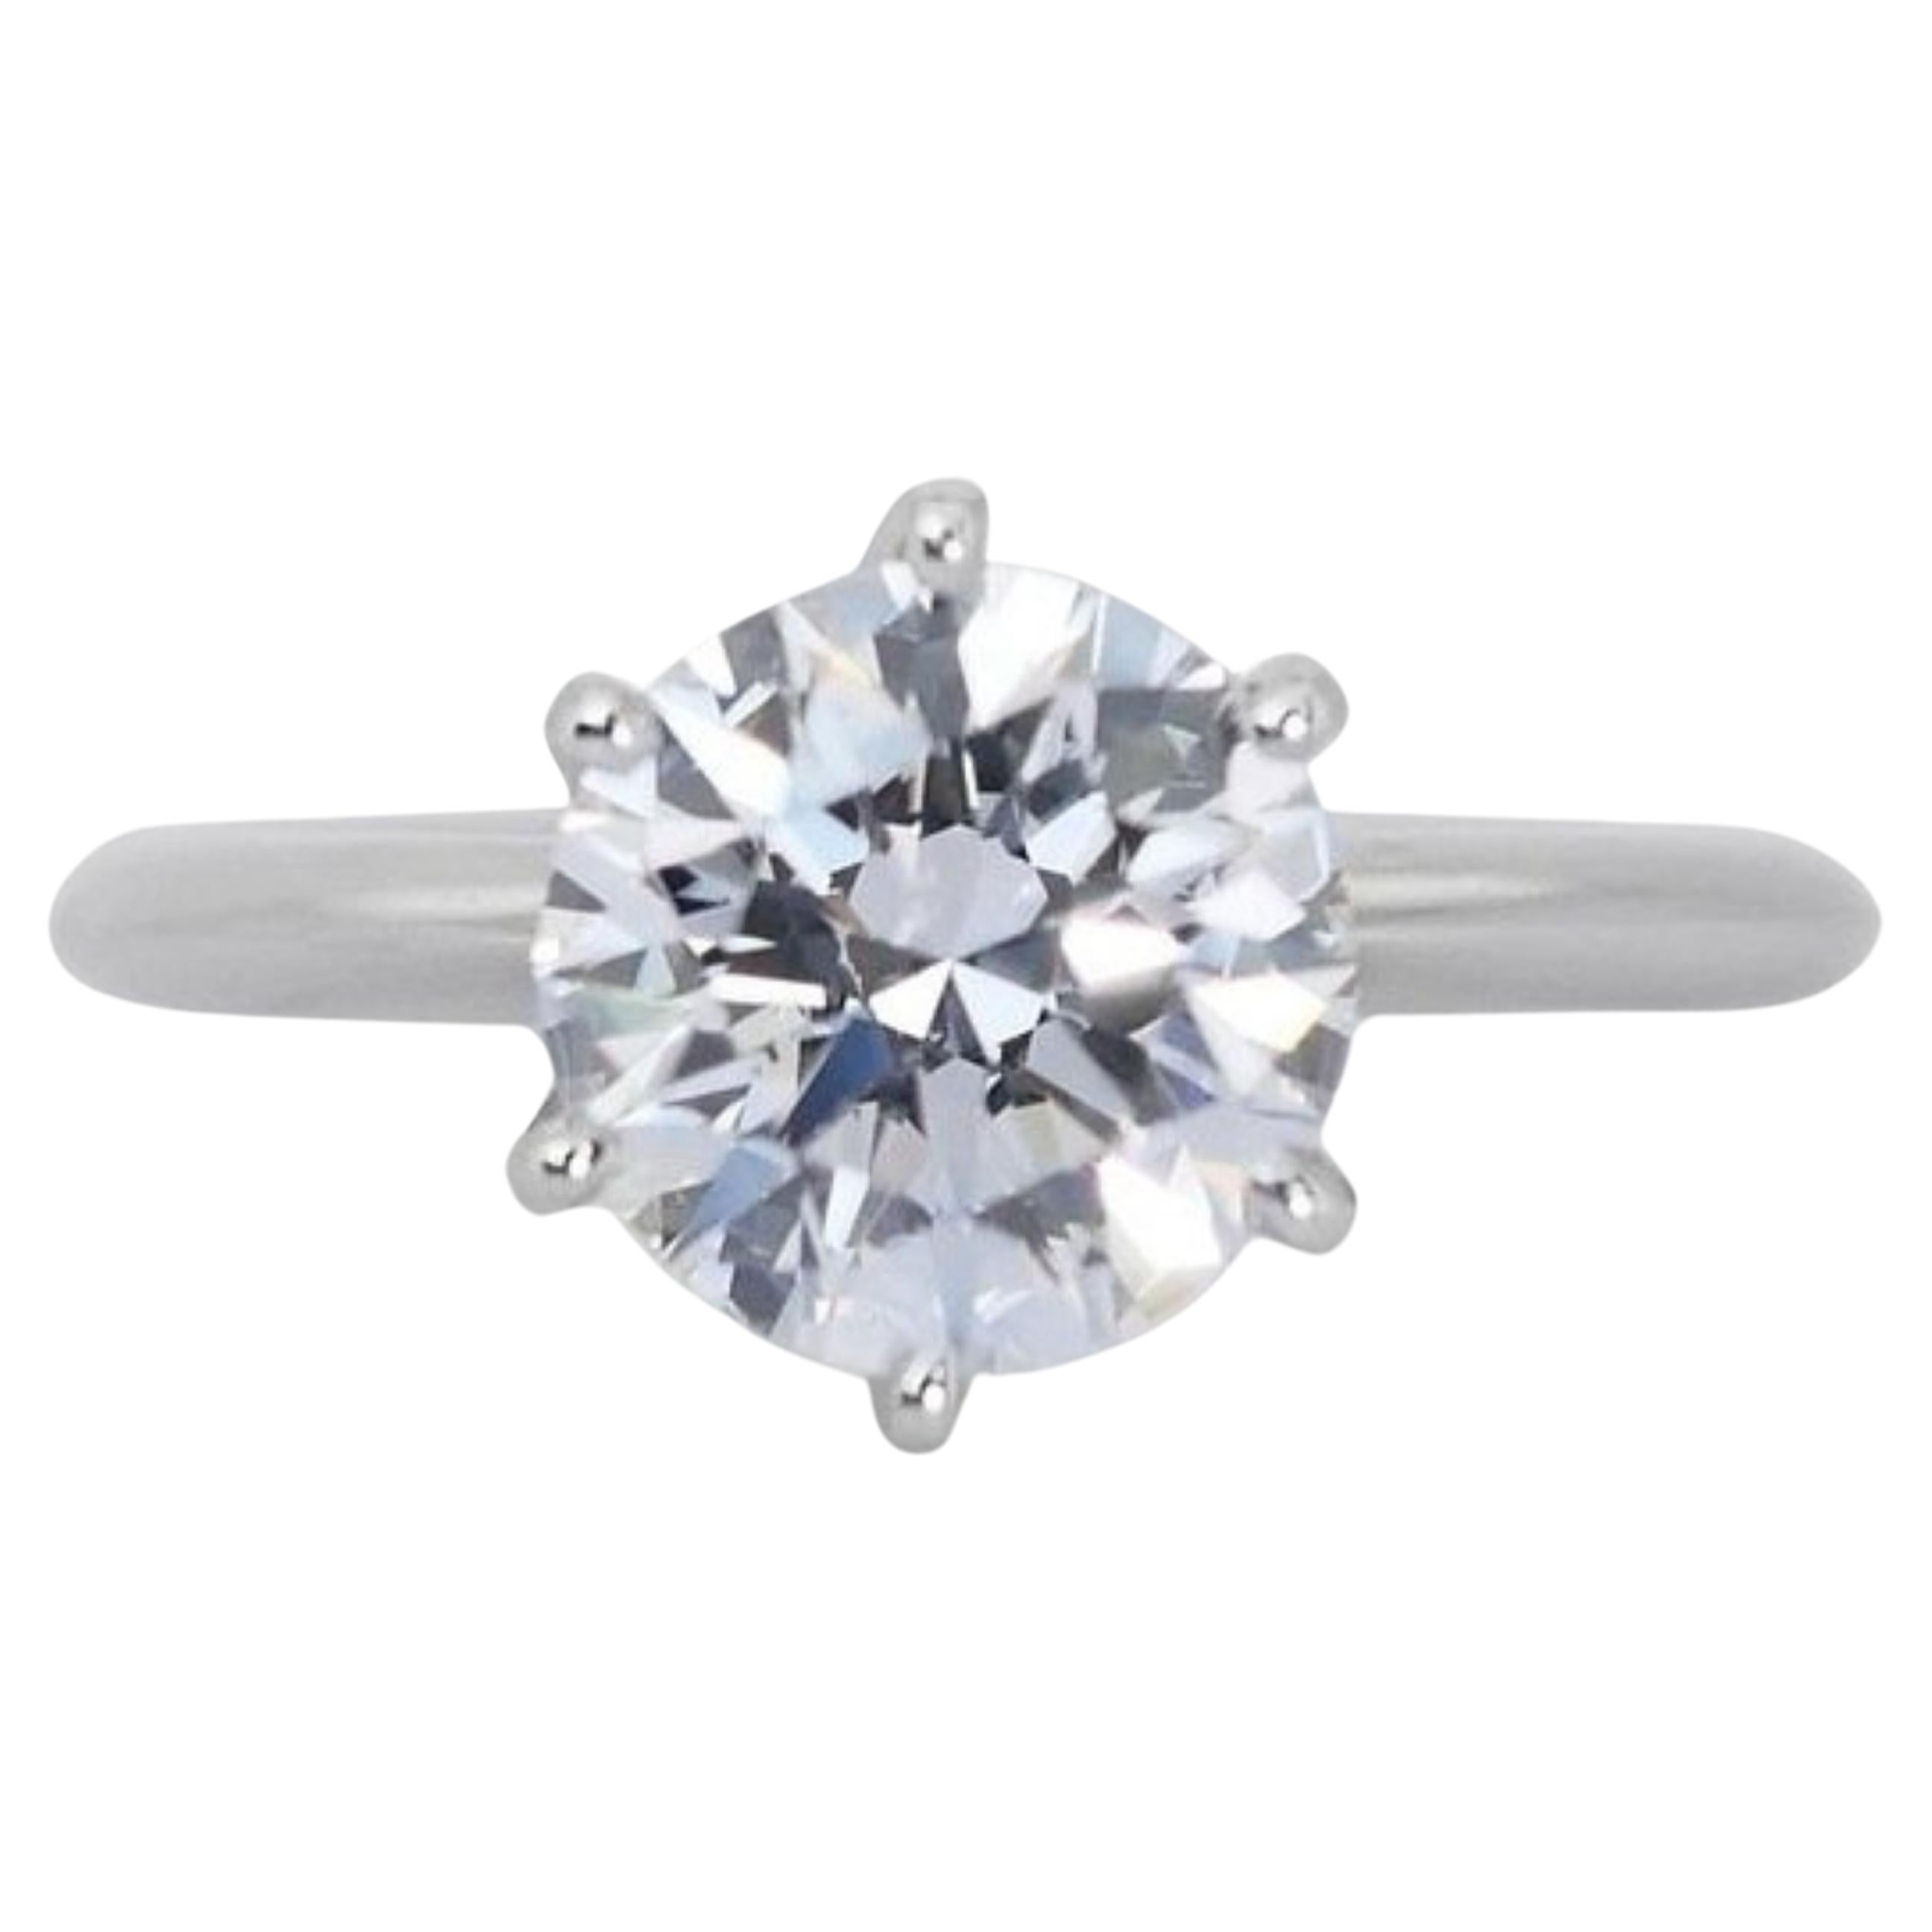 Stunning 18k White Gold 3.00 Carat Round Brilliant Diamond Solitaire Ring